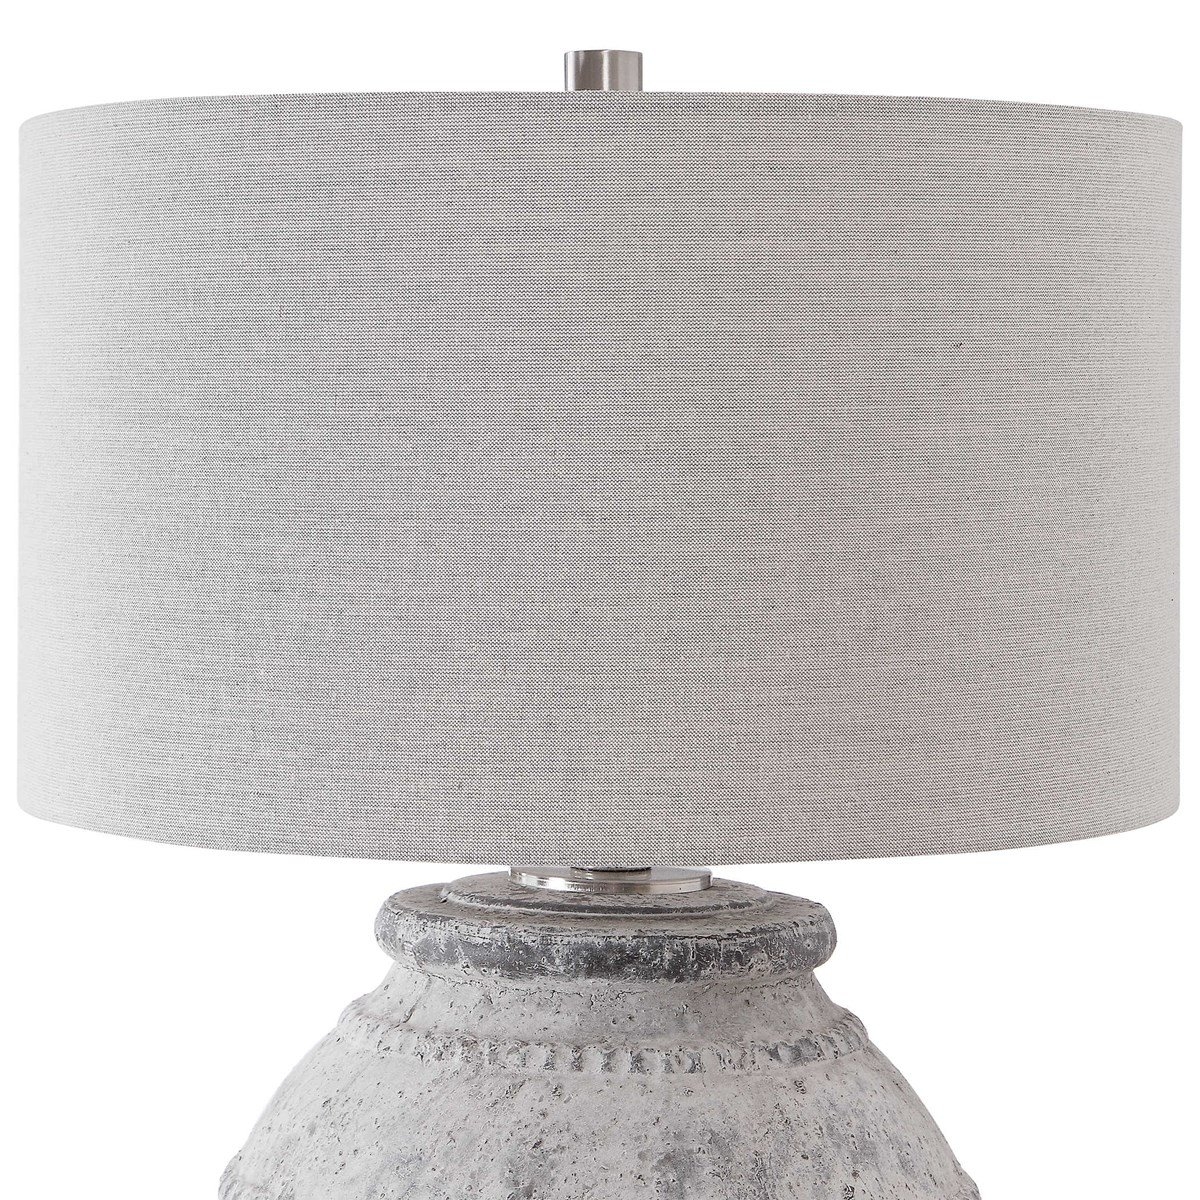 MONTSANT TABLE LAMP - Image 6